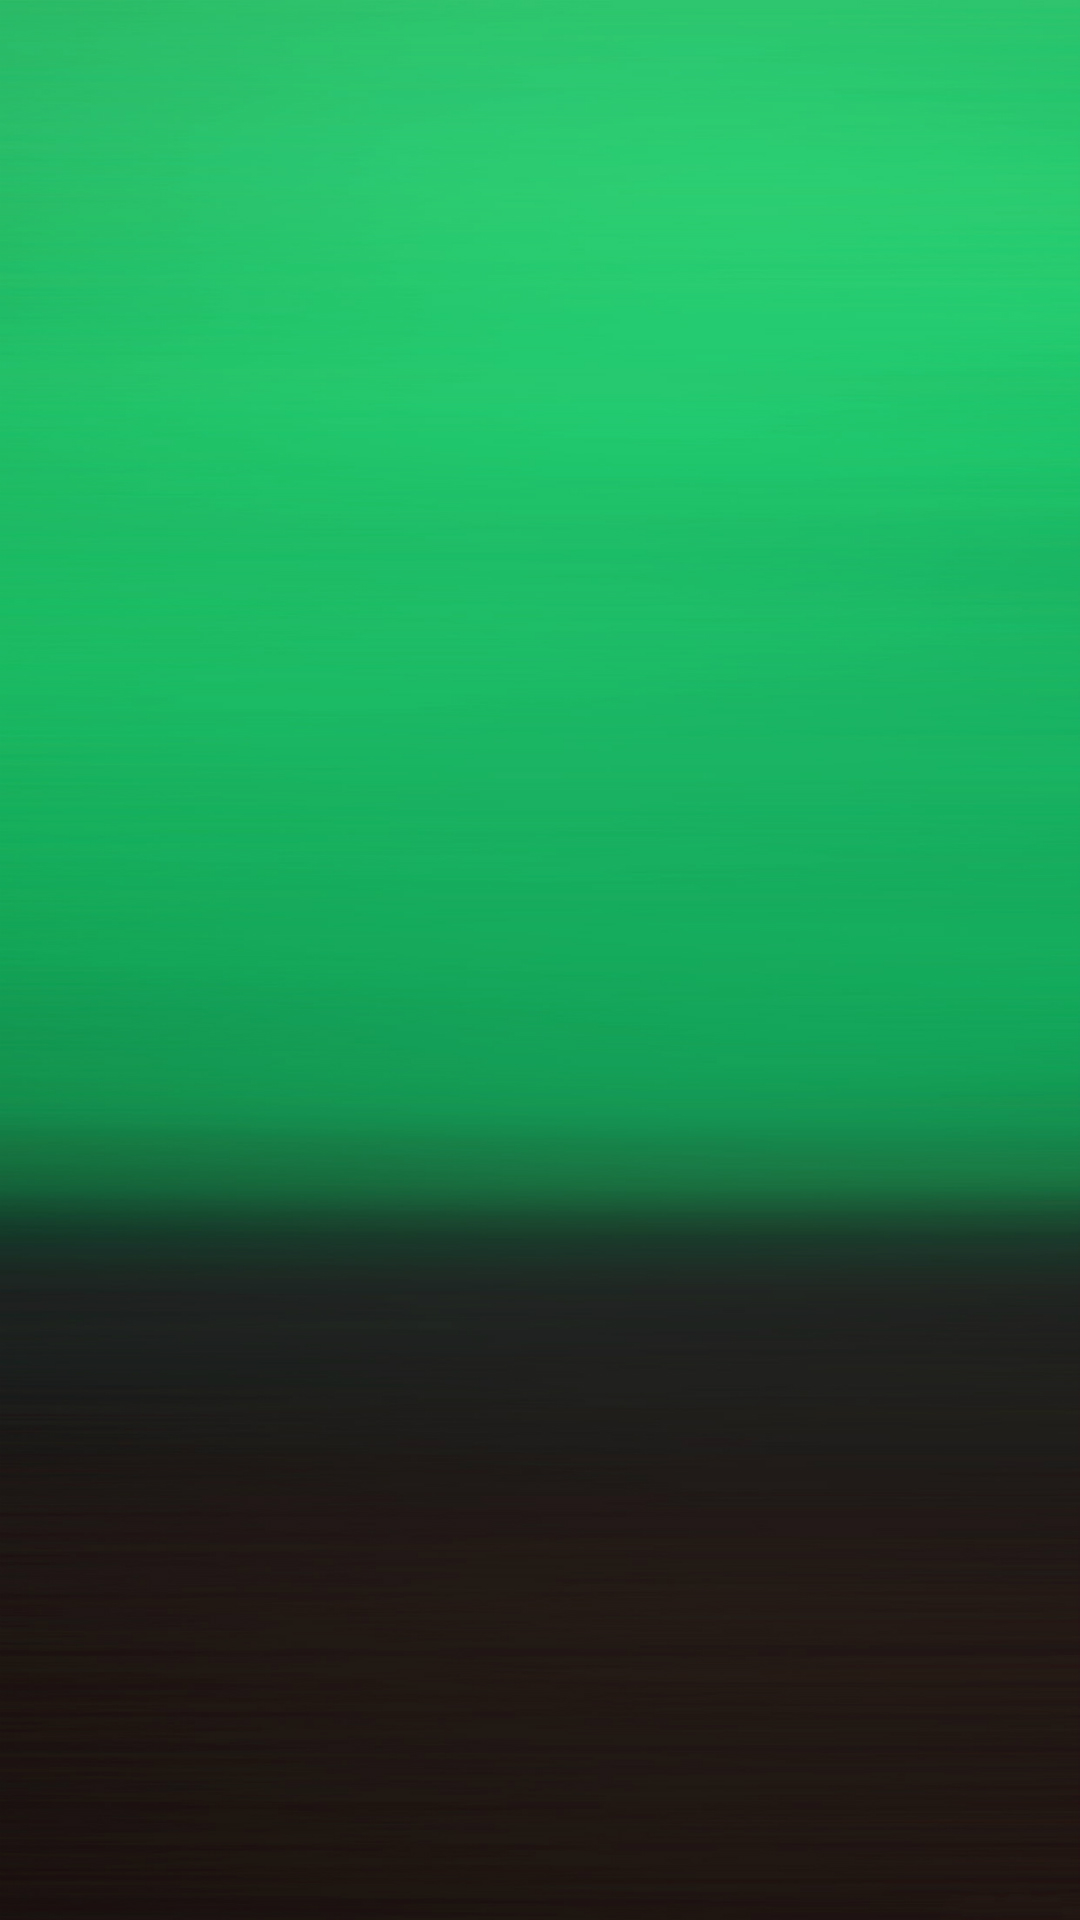 Motion Green Dark Gradation Blur iPhone 6 Wallpaper Download iPhone